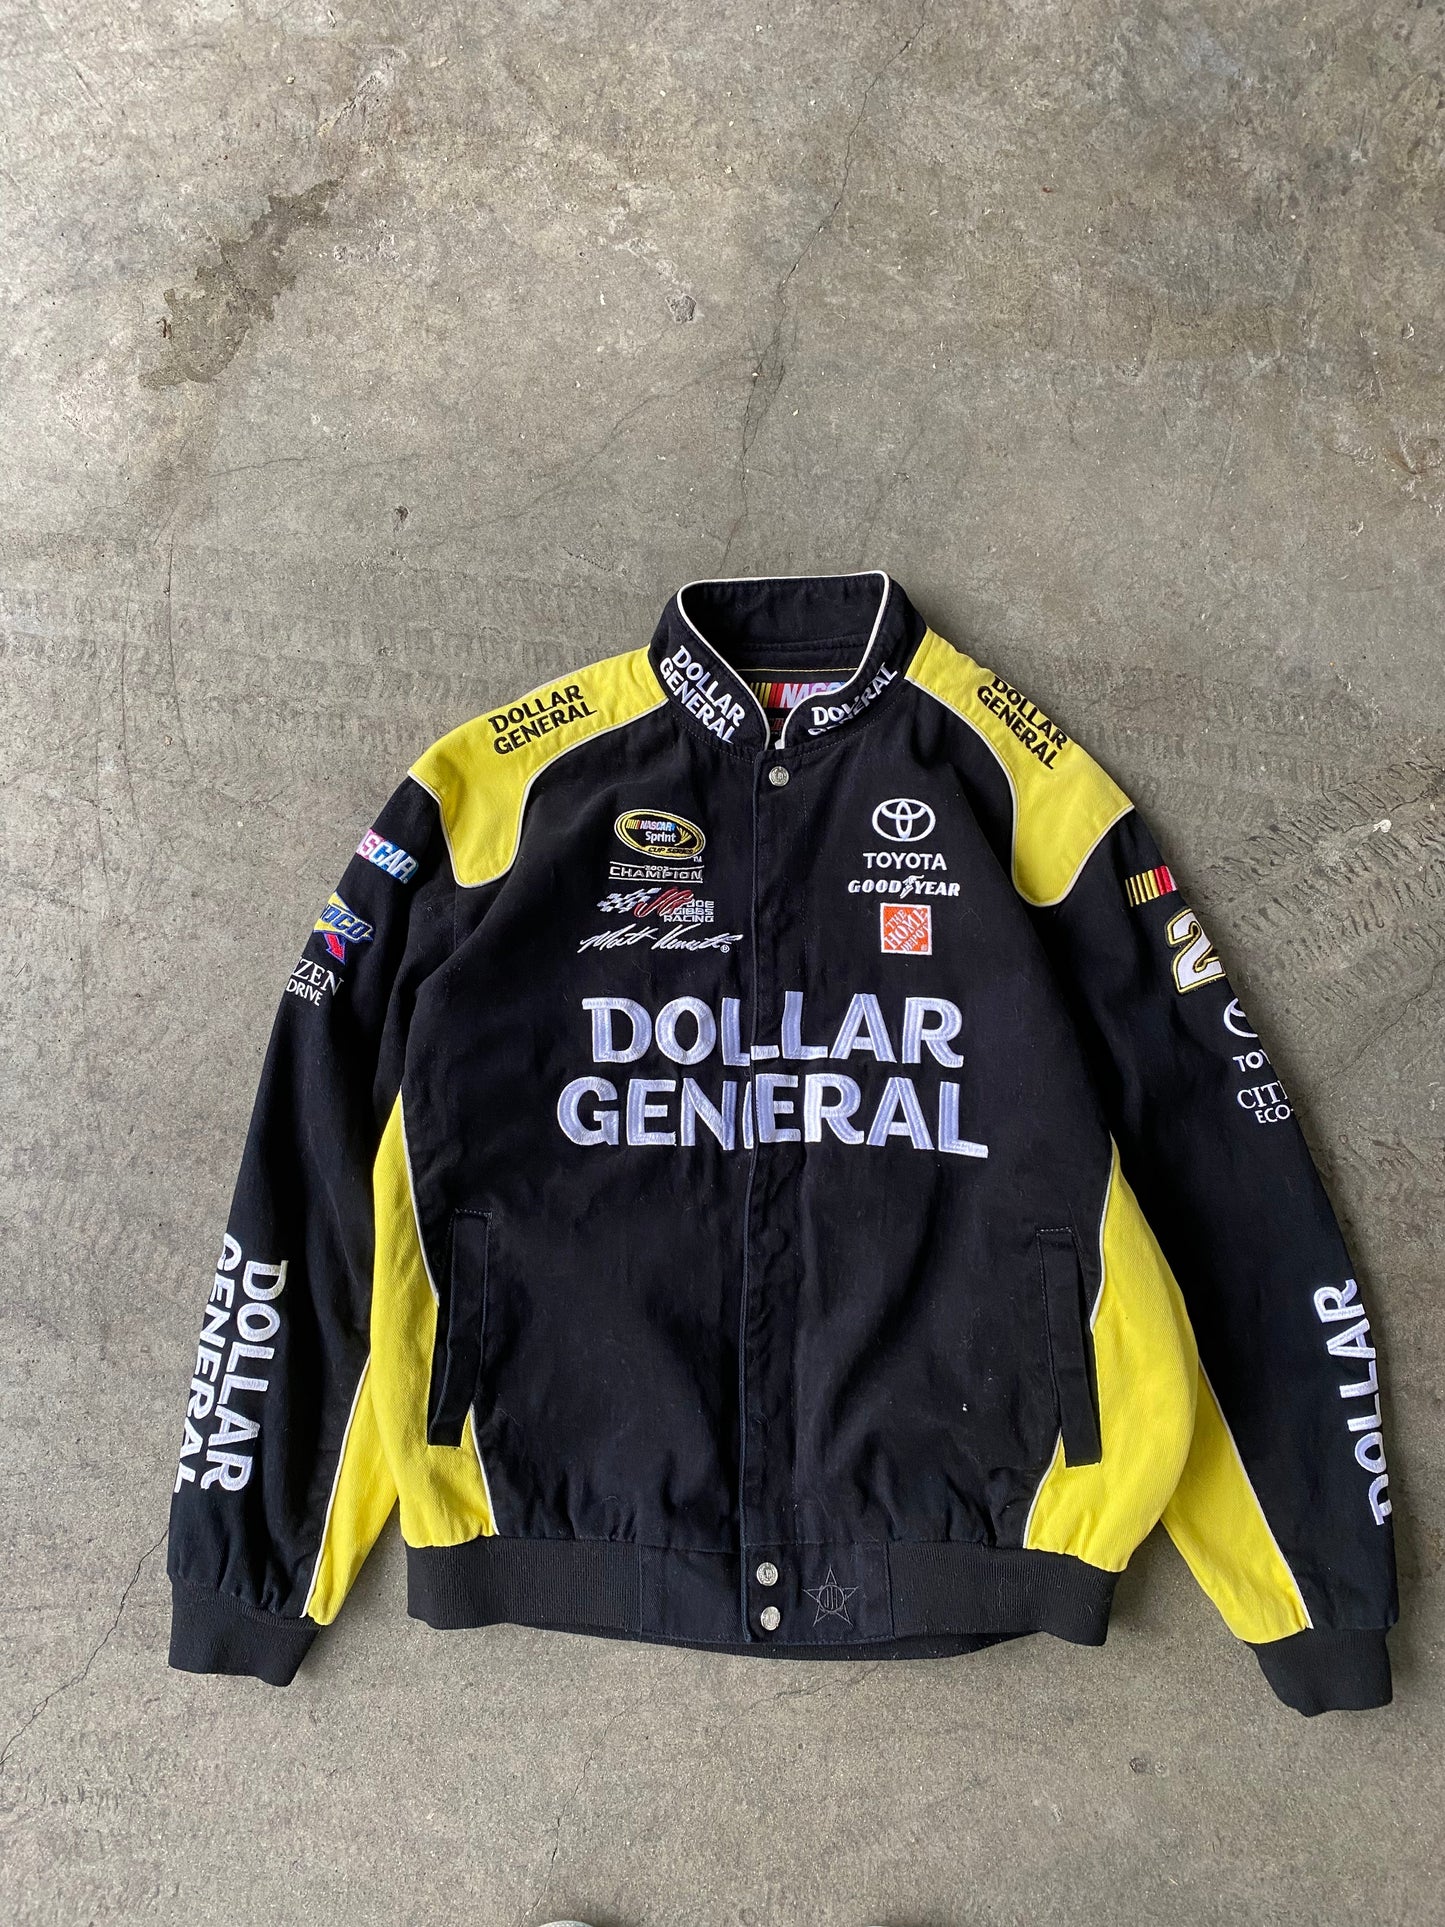 ~ (L) Dollar General Toyota Nascar Racing Jacket